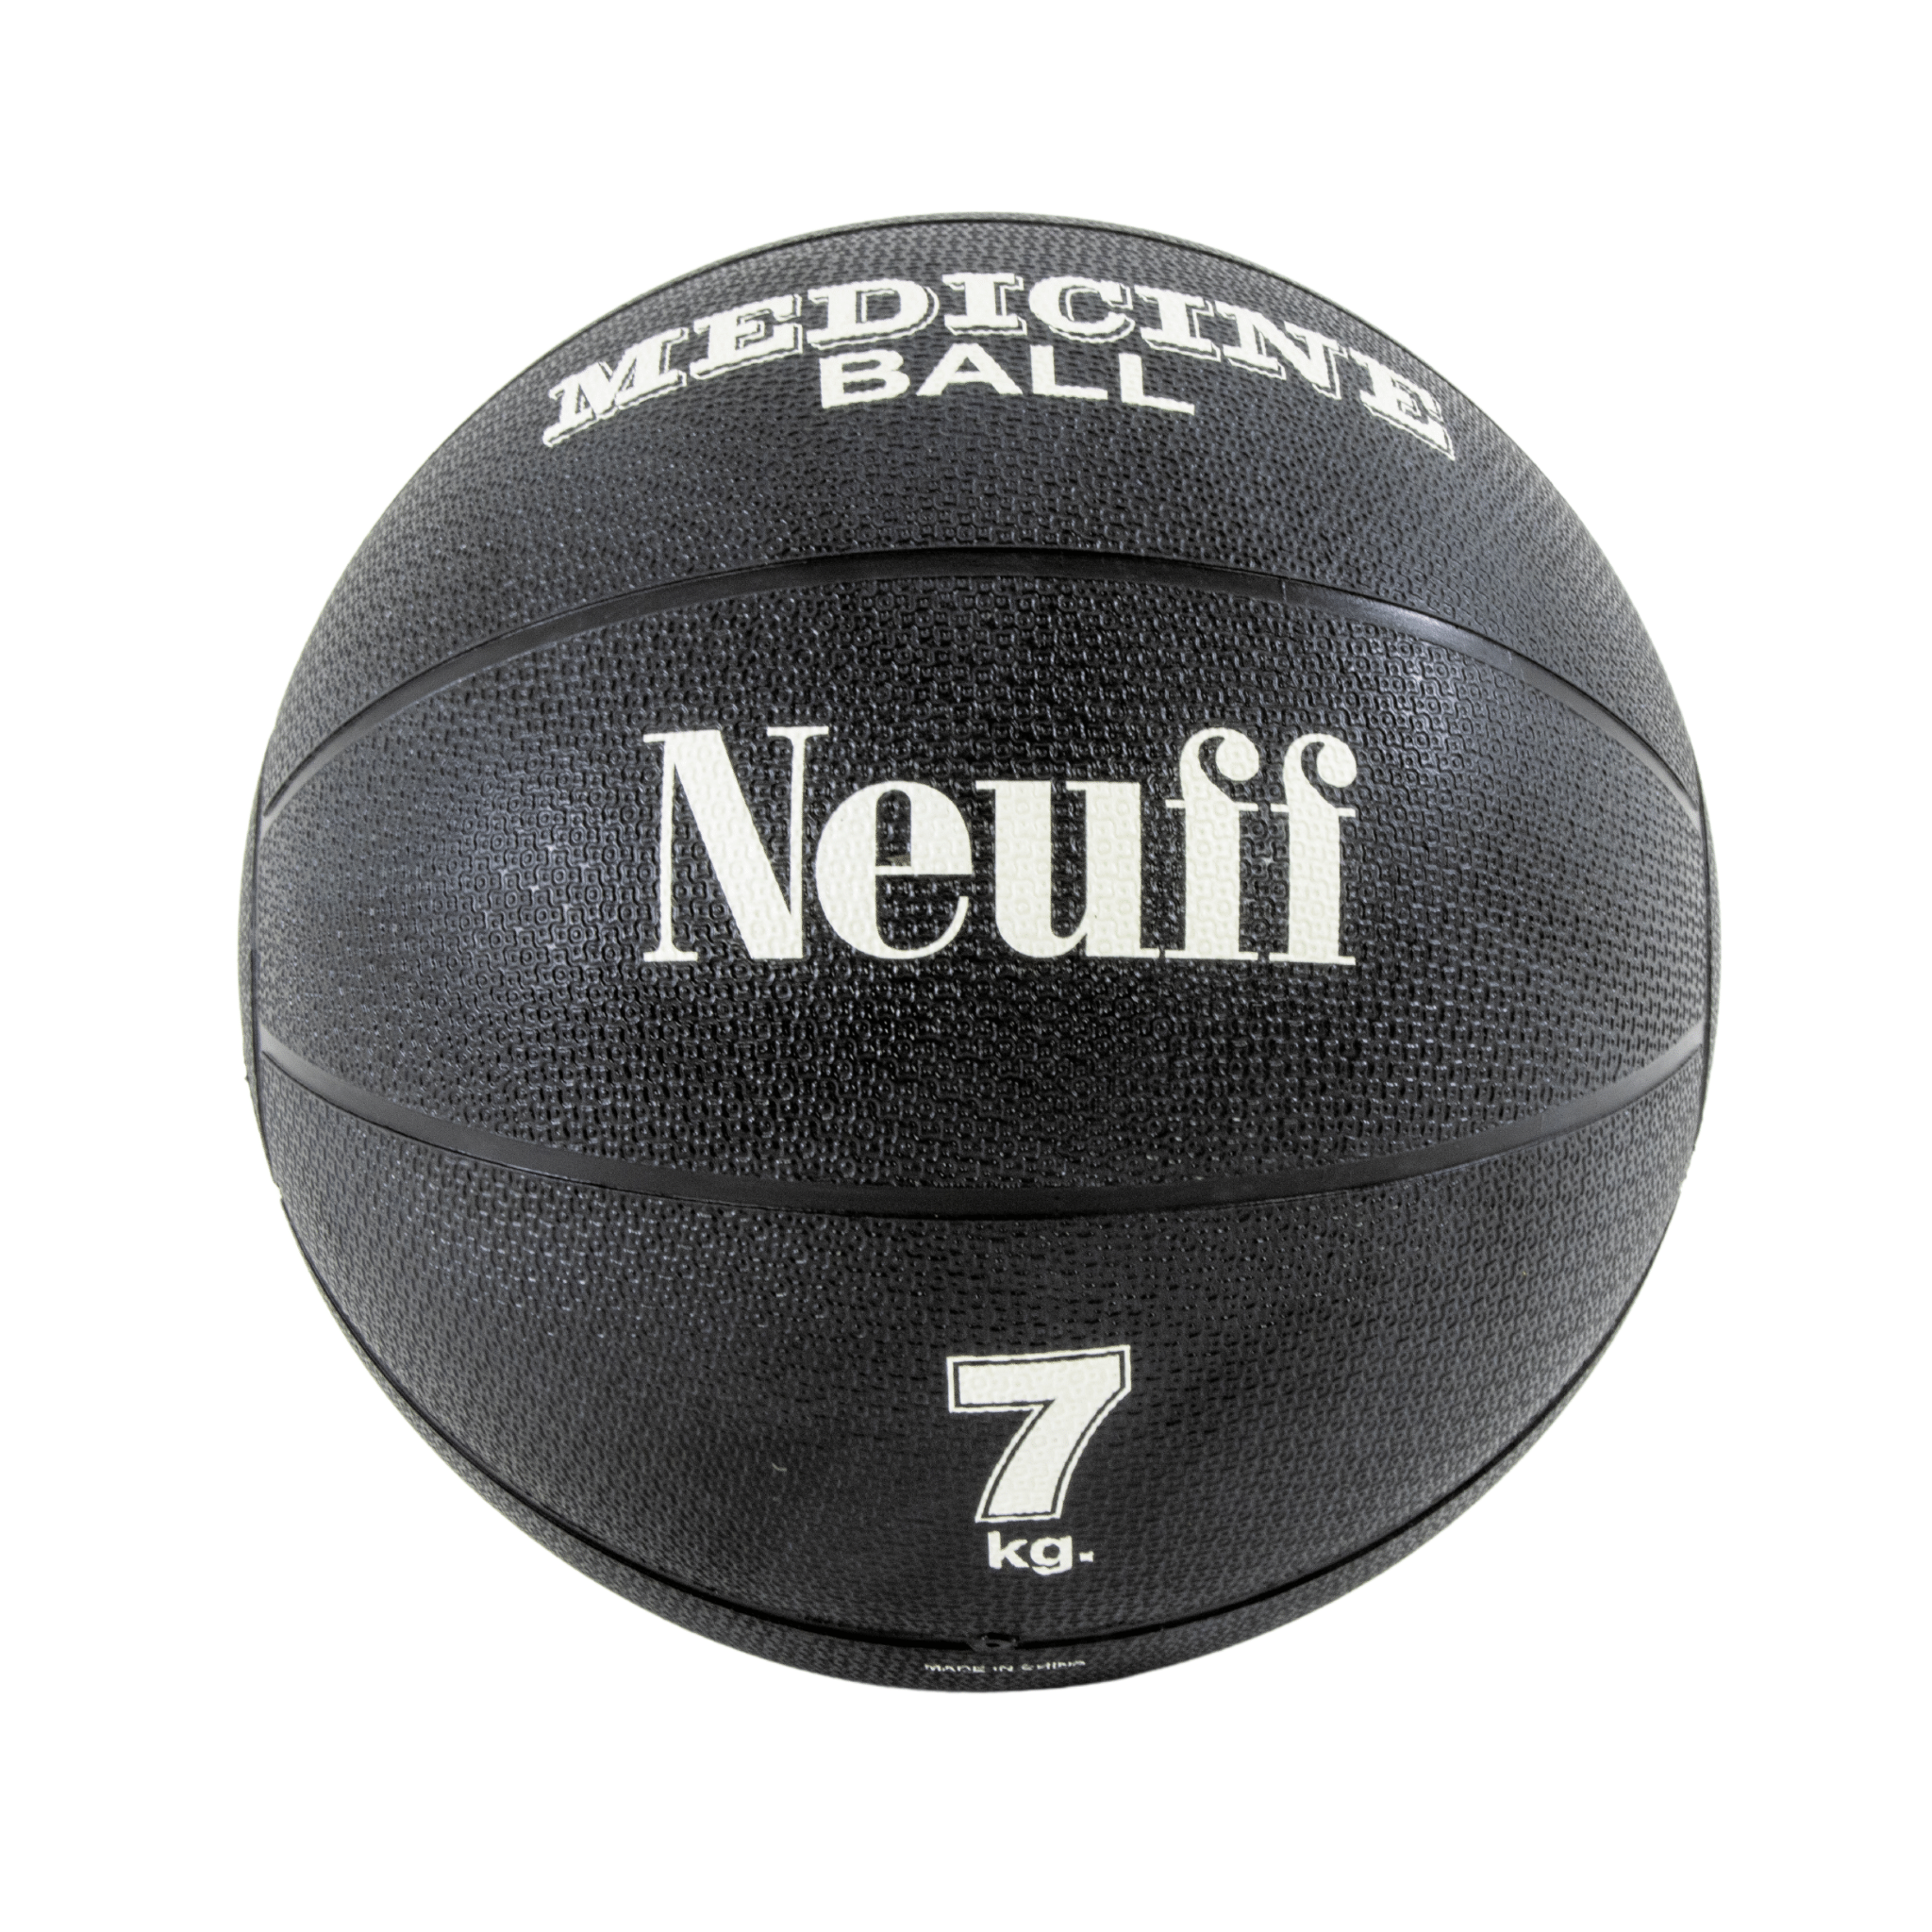 Neuff Medicine Ball | 7 kg | Black with white logo